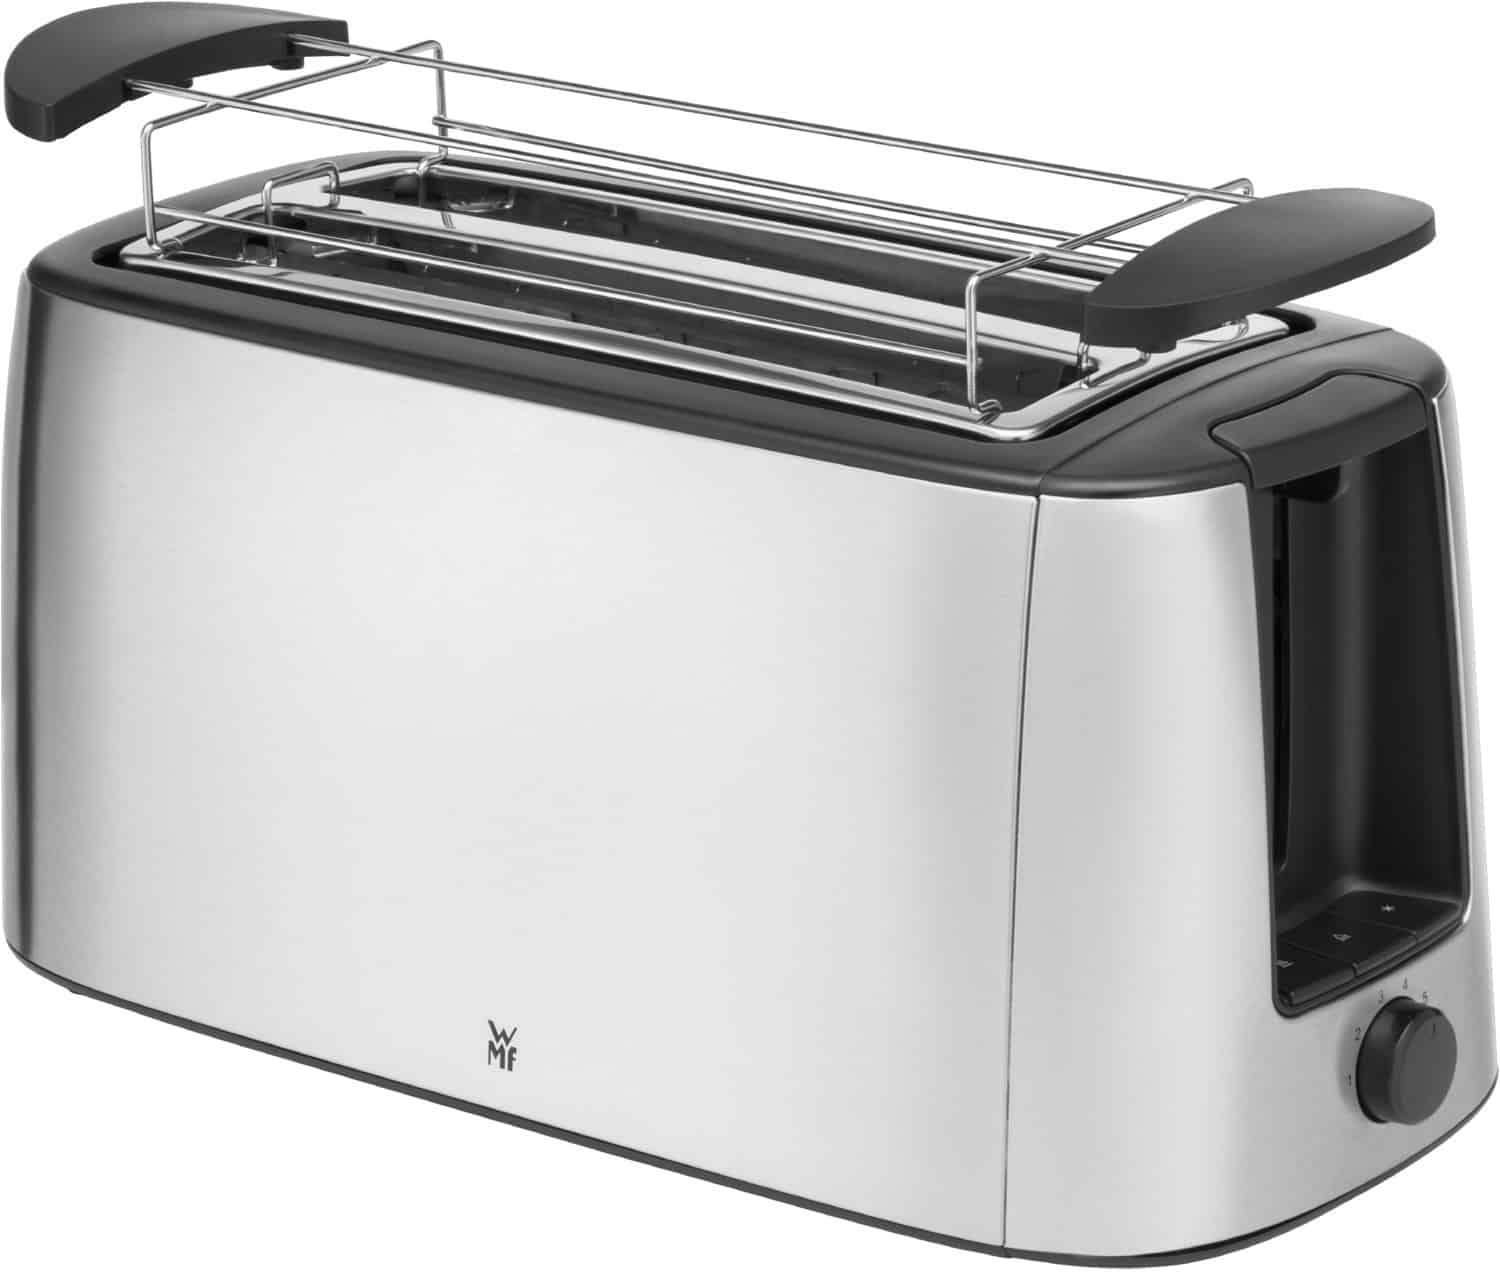 WMF Bueno Pro Doppel-Langschlitz Toaster 0414150011 cromargan matt